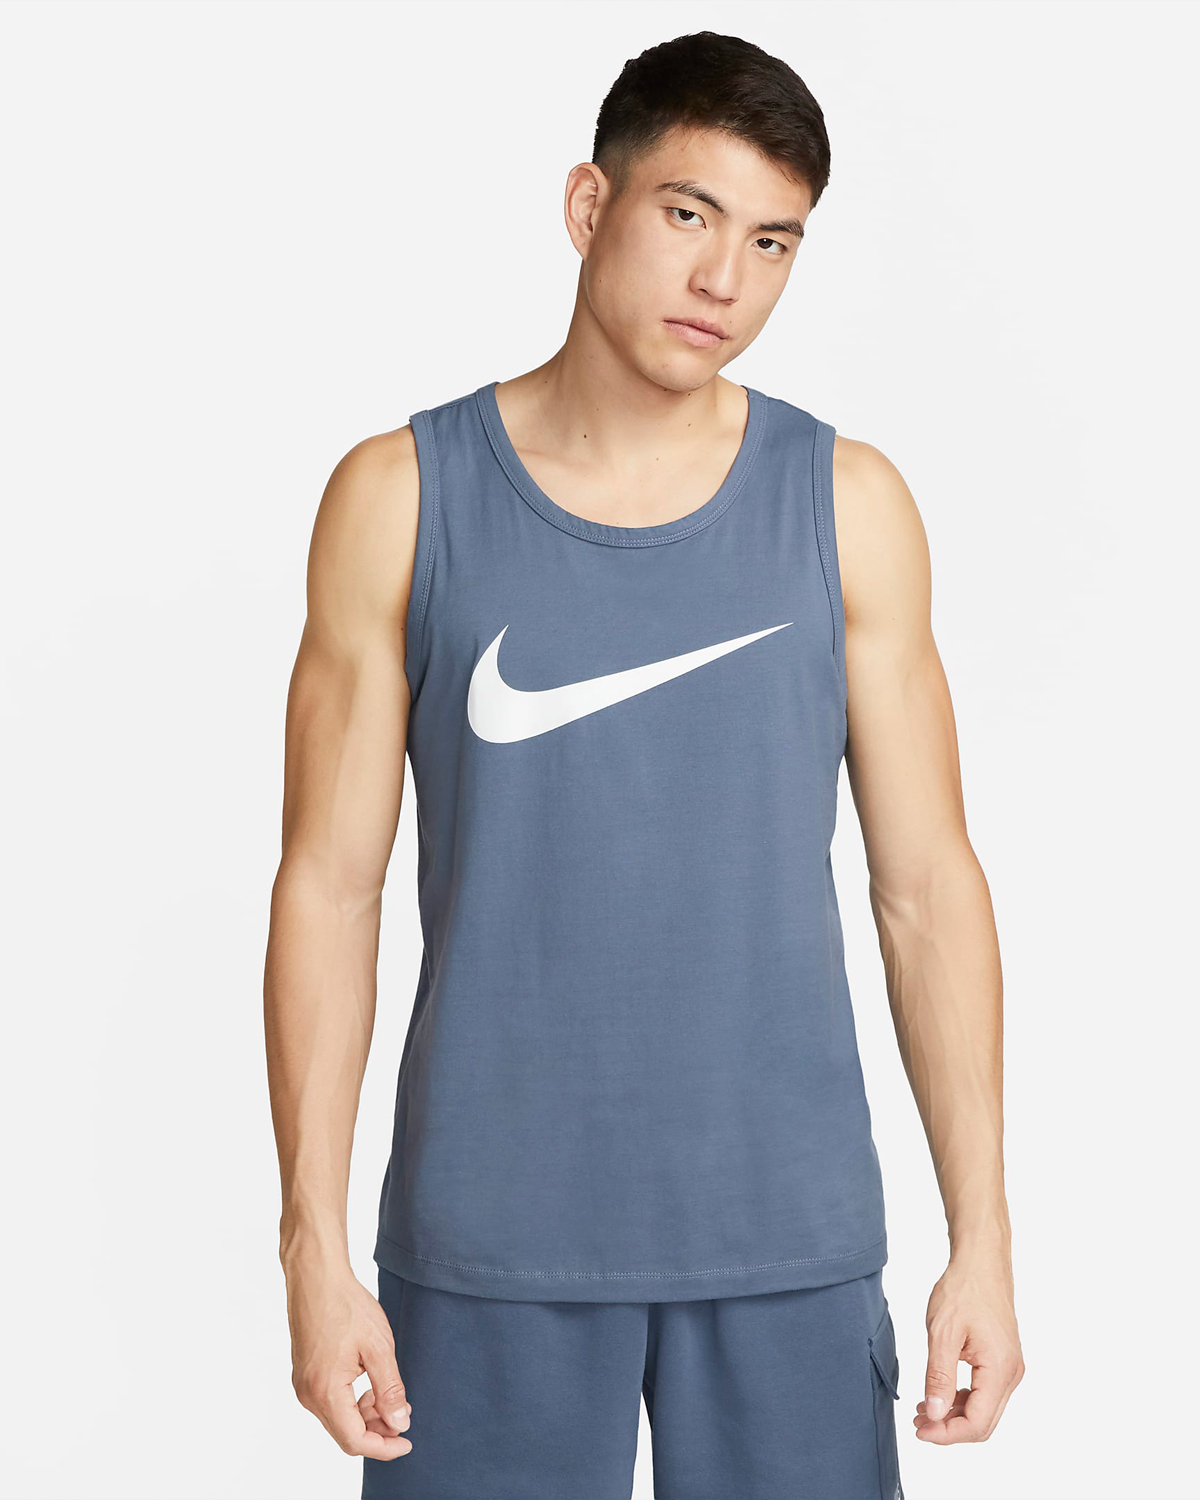 Nike-Sportswear-Tank-Top-Diffused-Blue